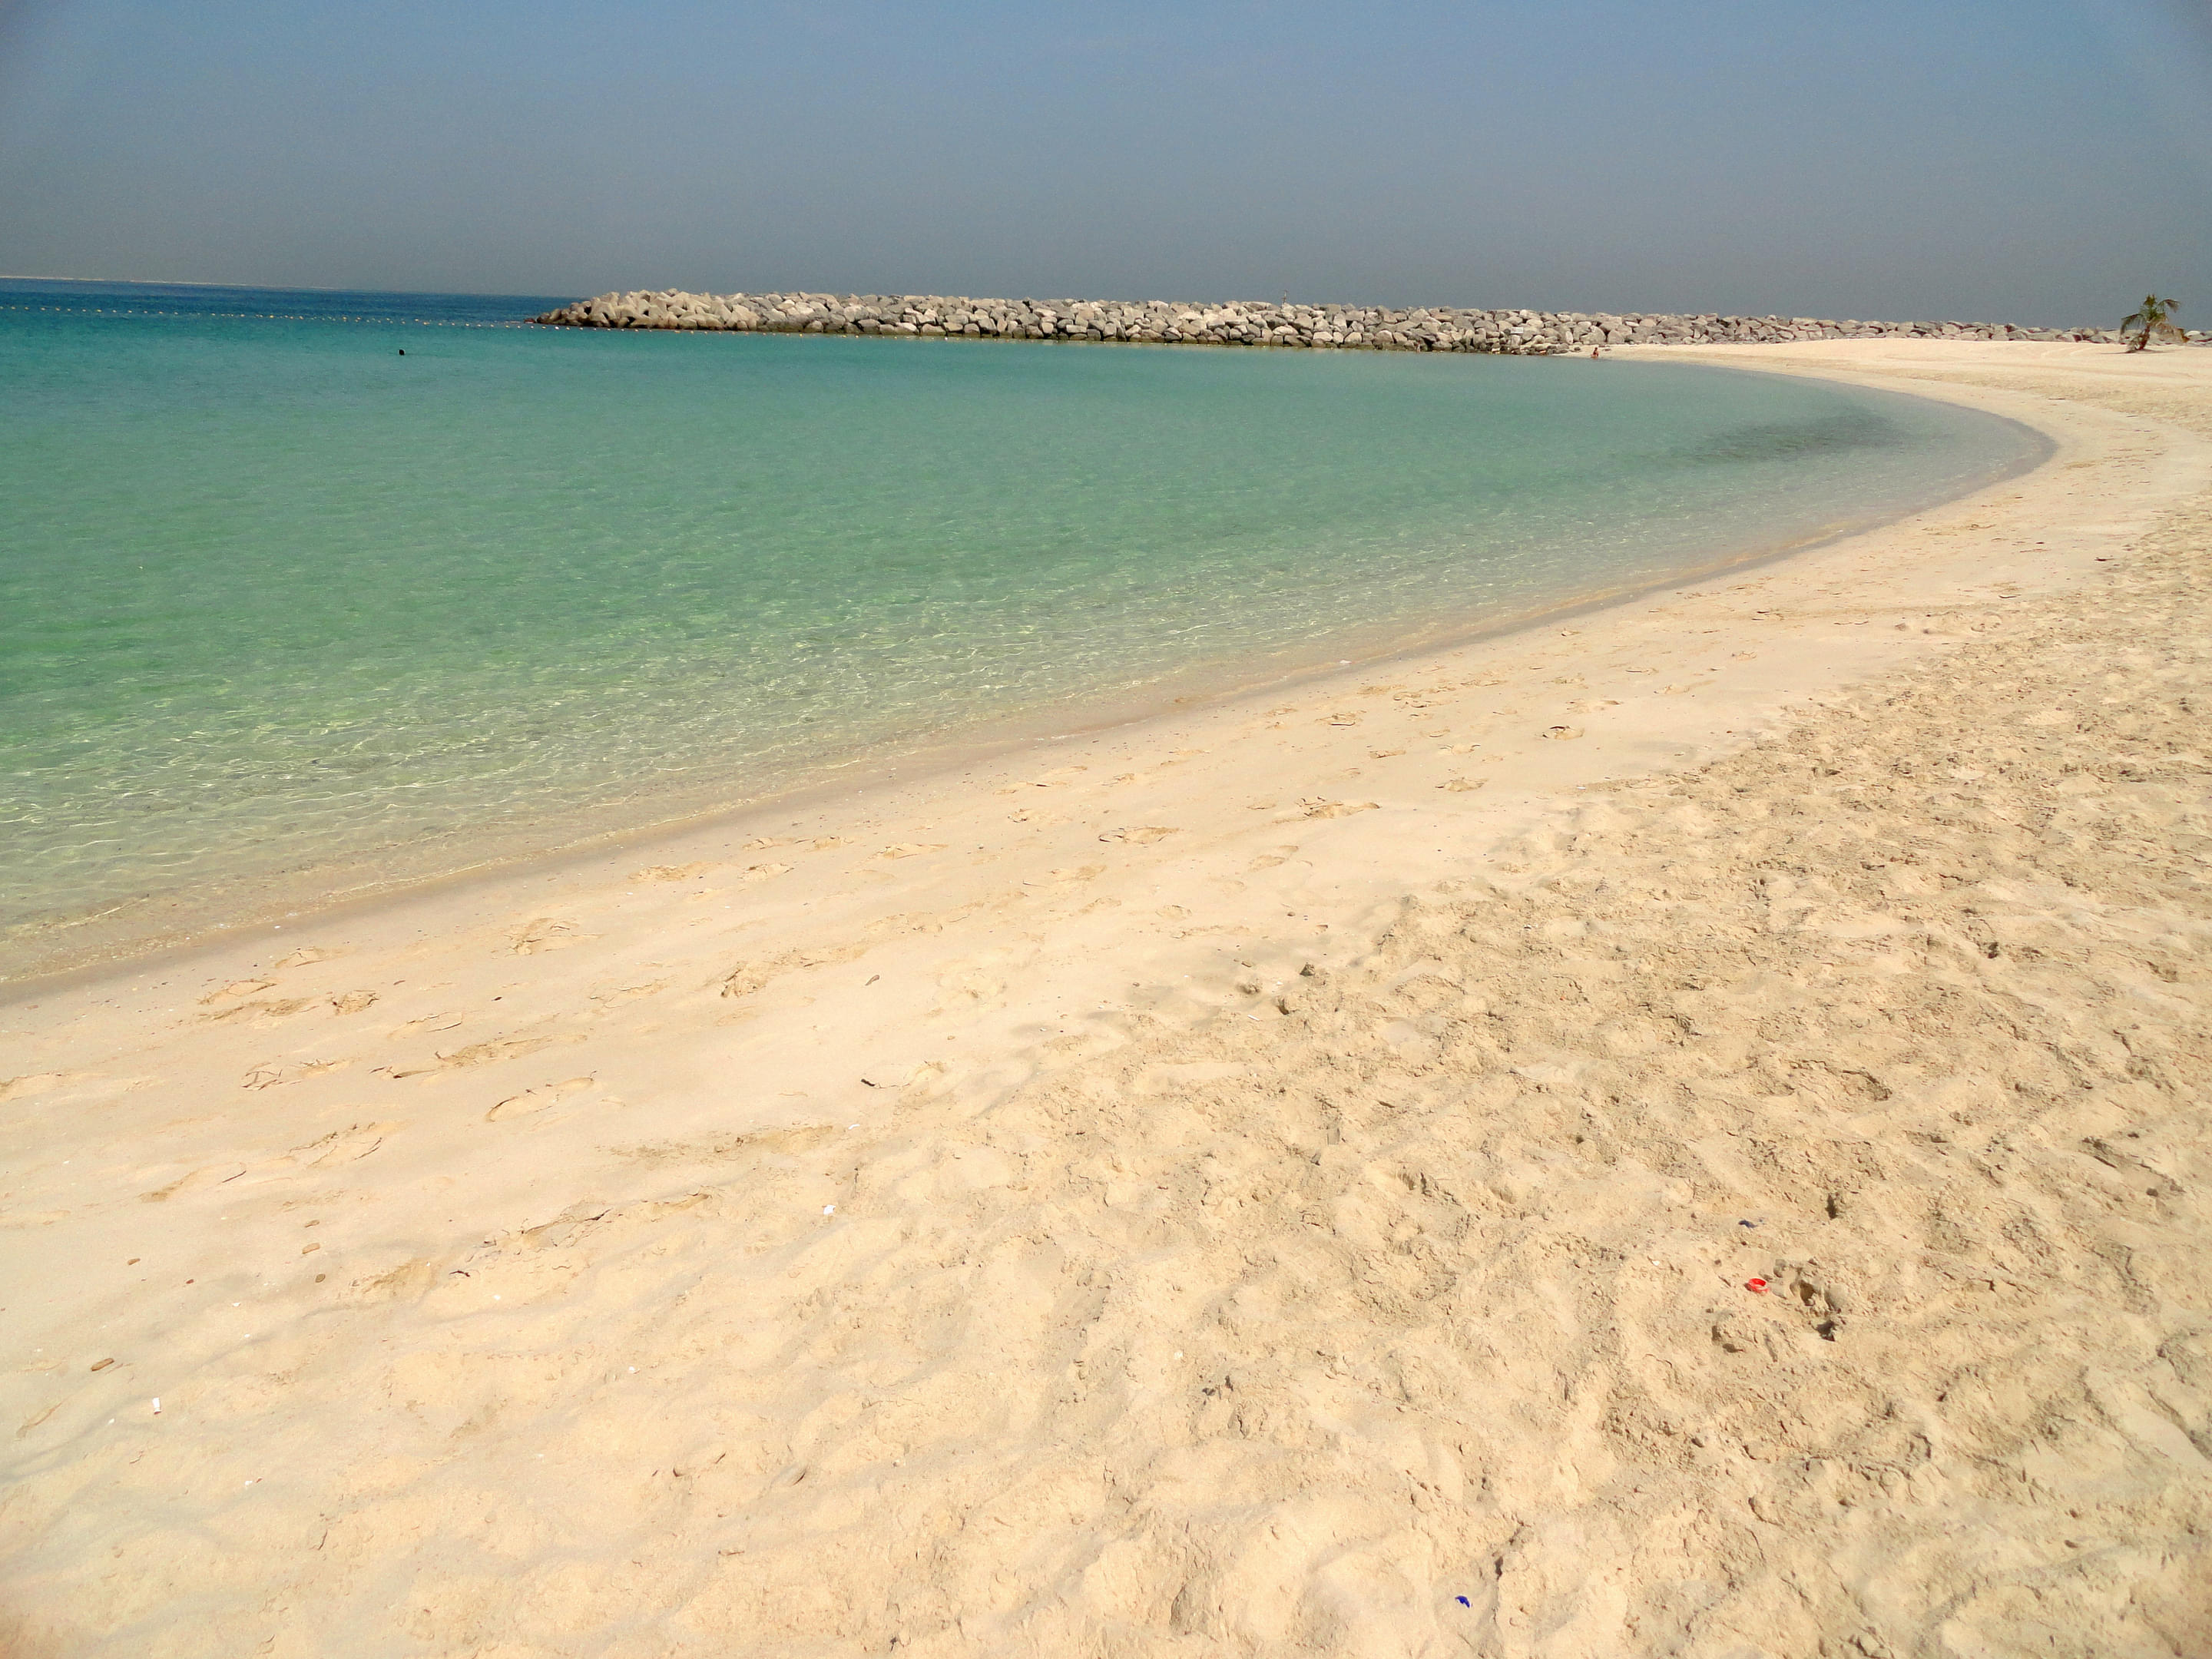 Al Mamzar Beach Park Overview